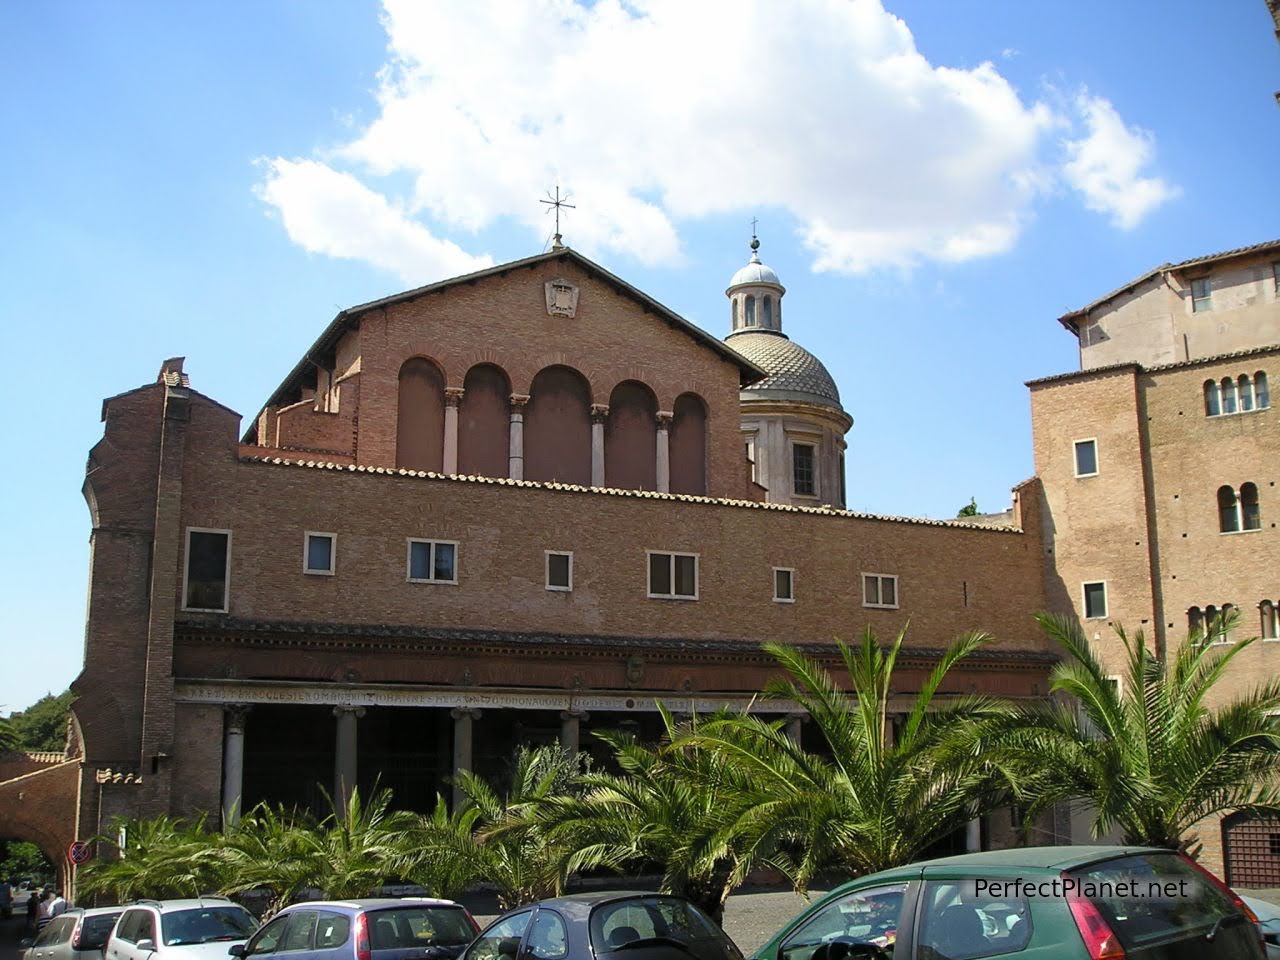 Basilica of St. John and St. Paul